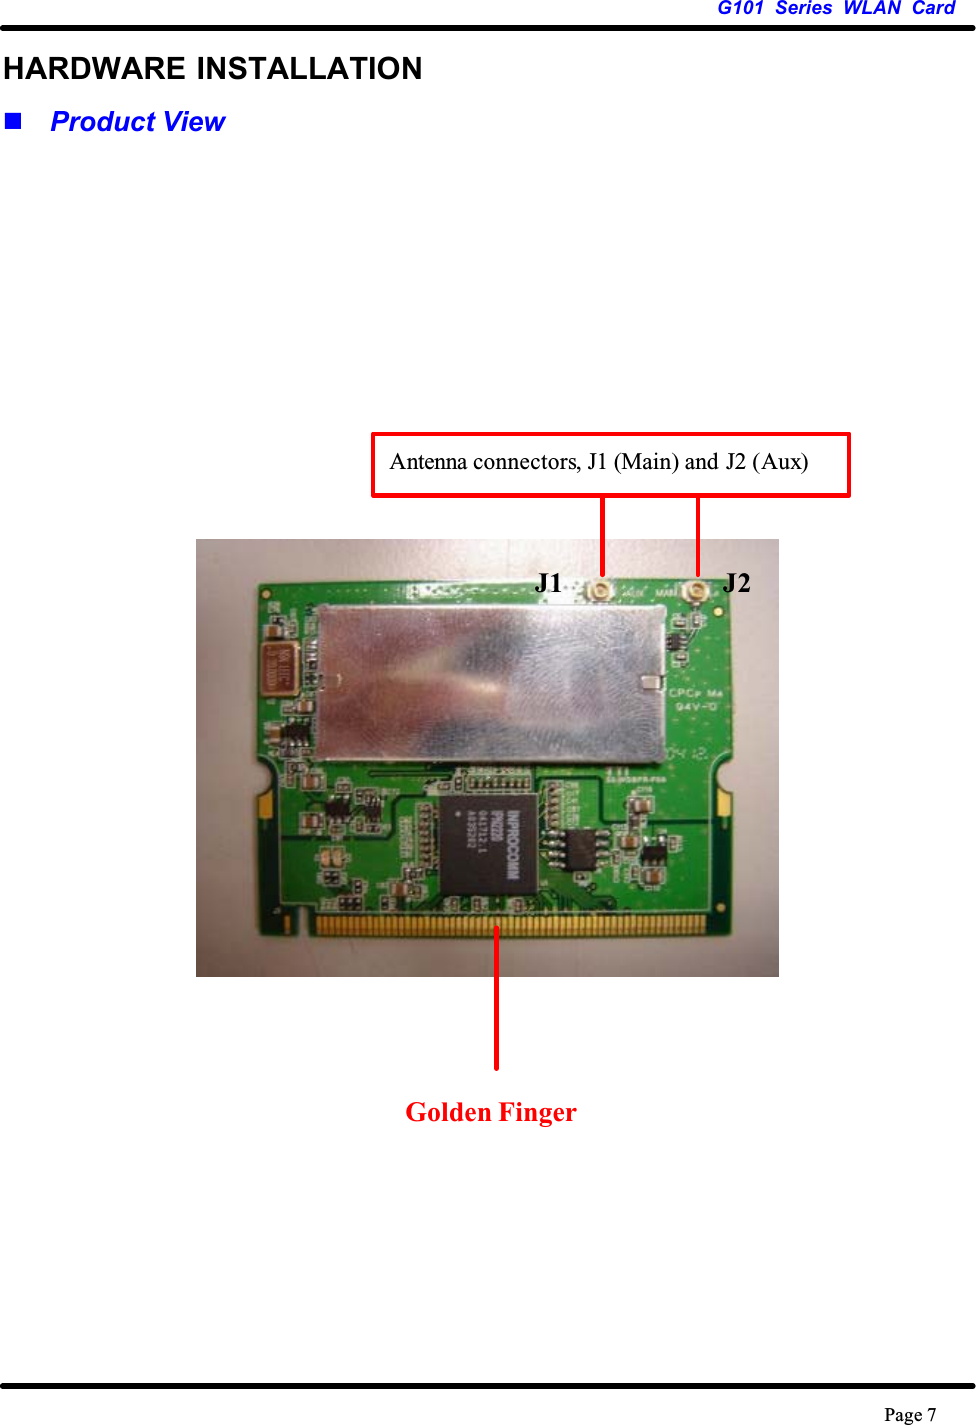 G101 Series WLAN CardPage 7HARDWARE INSTALLATIONProduct ViewGolden FingerAntenna connectors, J1 (Main) and J2 (Aux)J1 J2